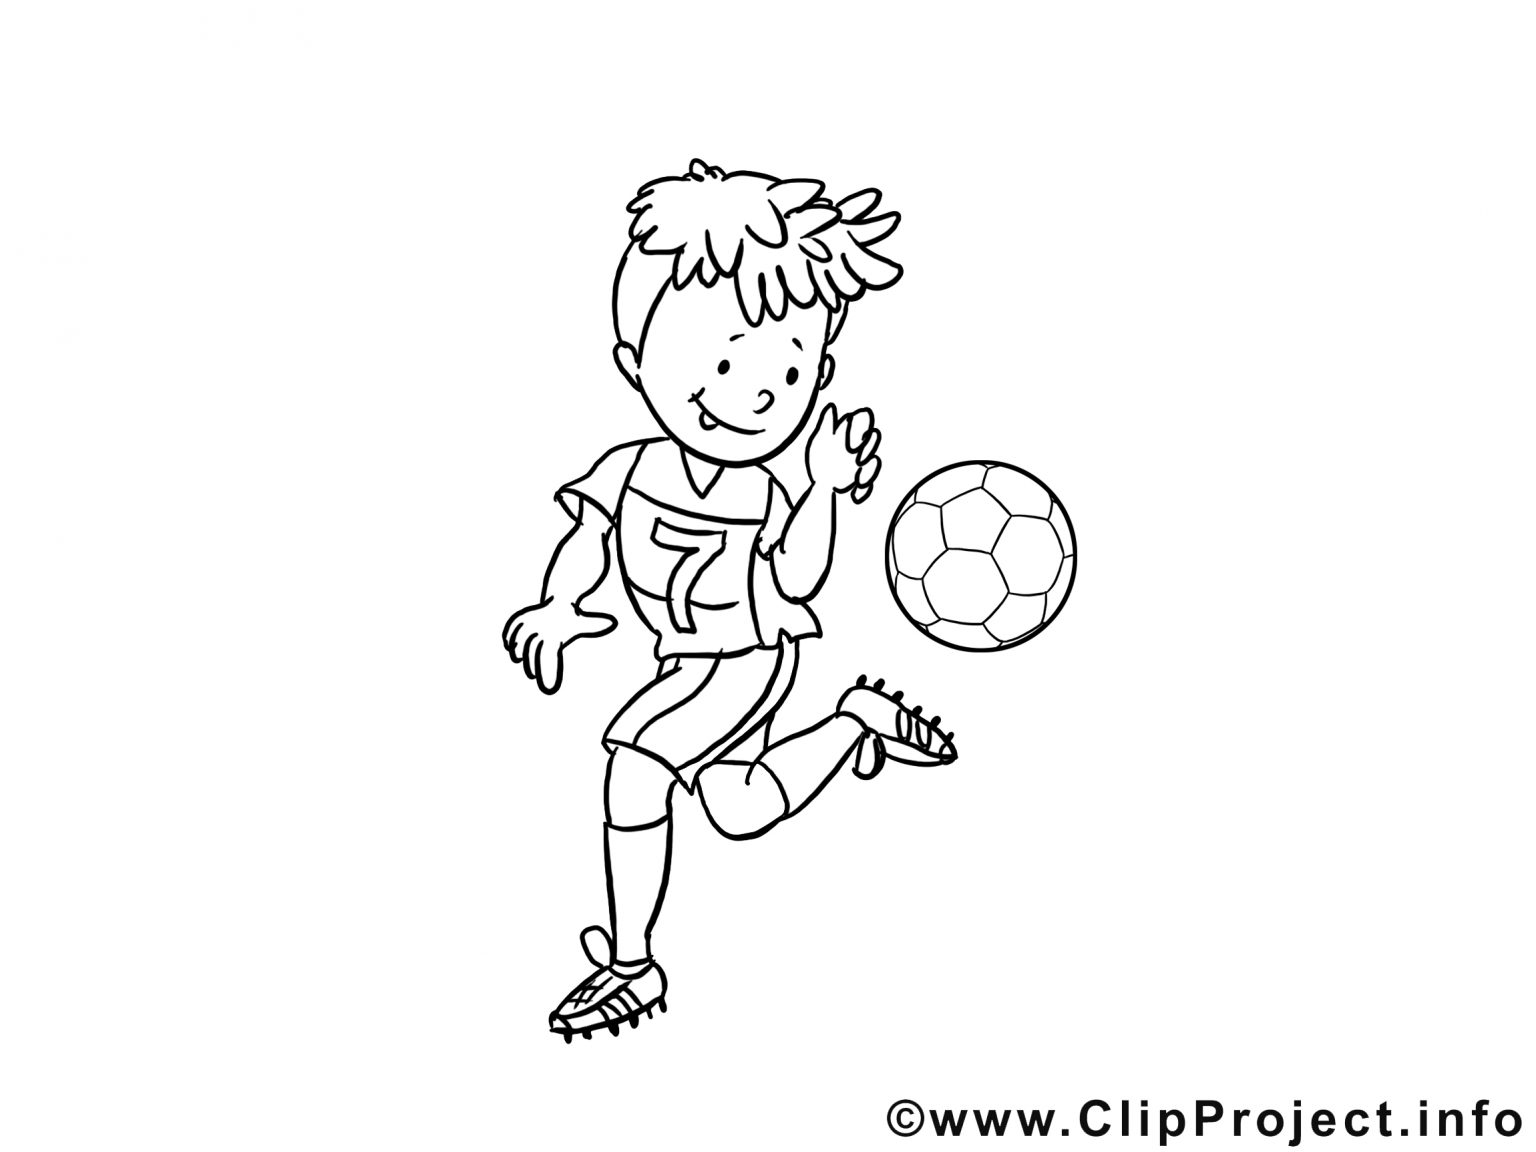 Футбол картинки для презентации для детей